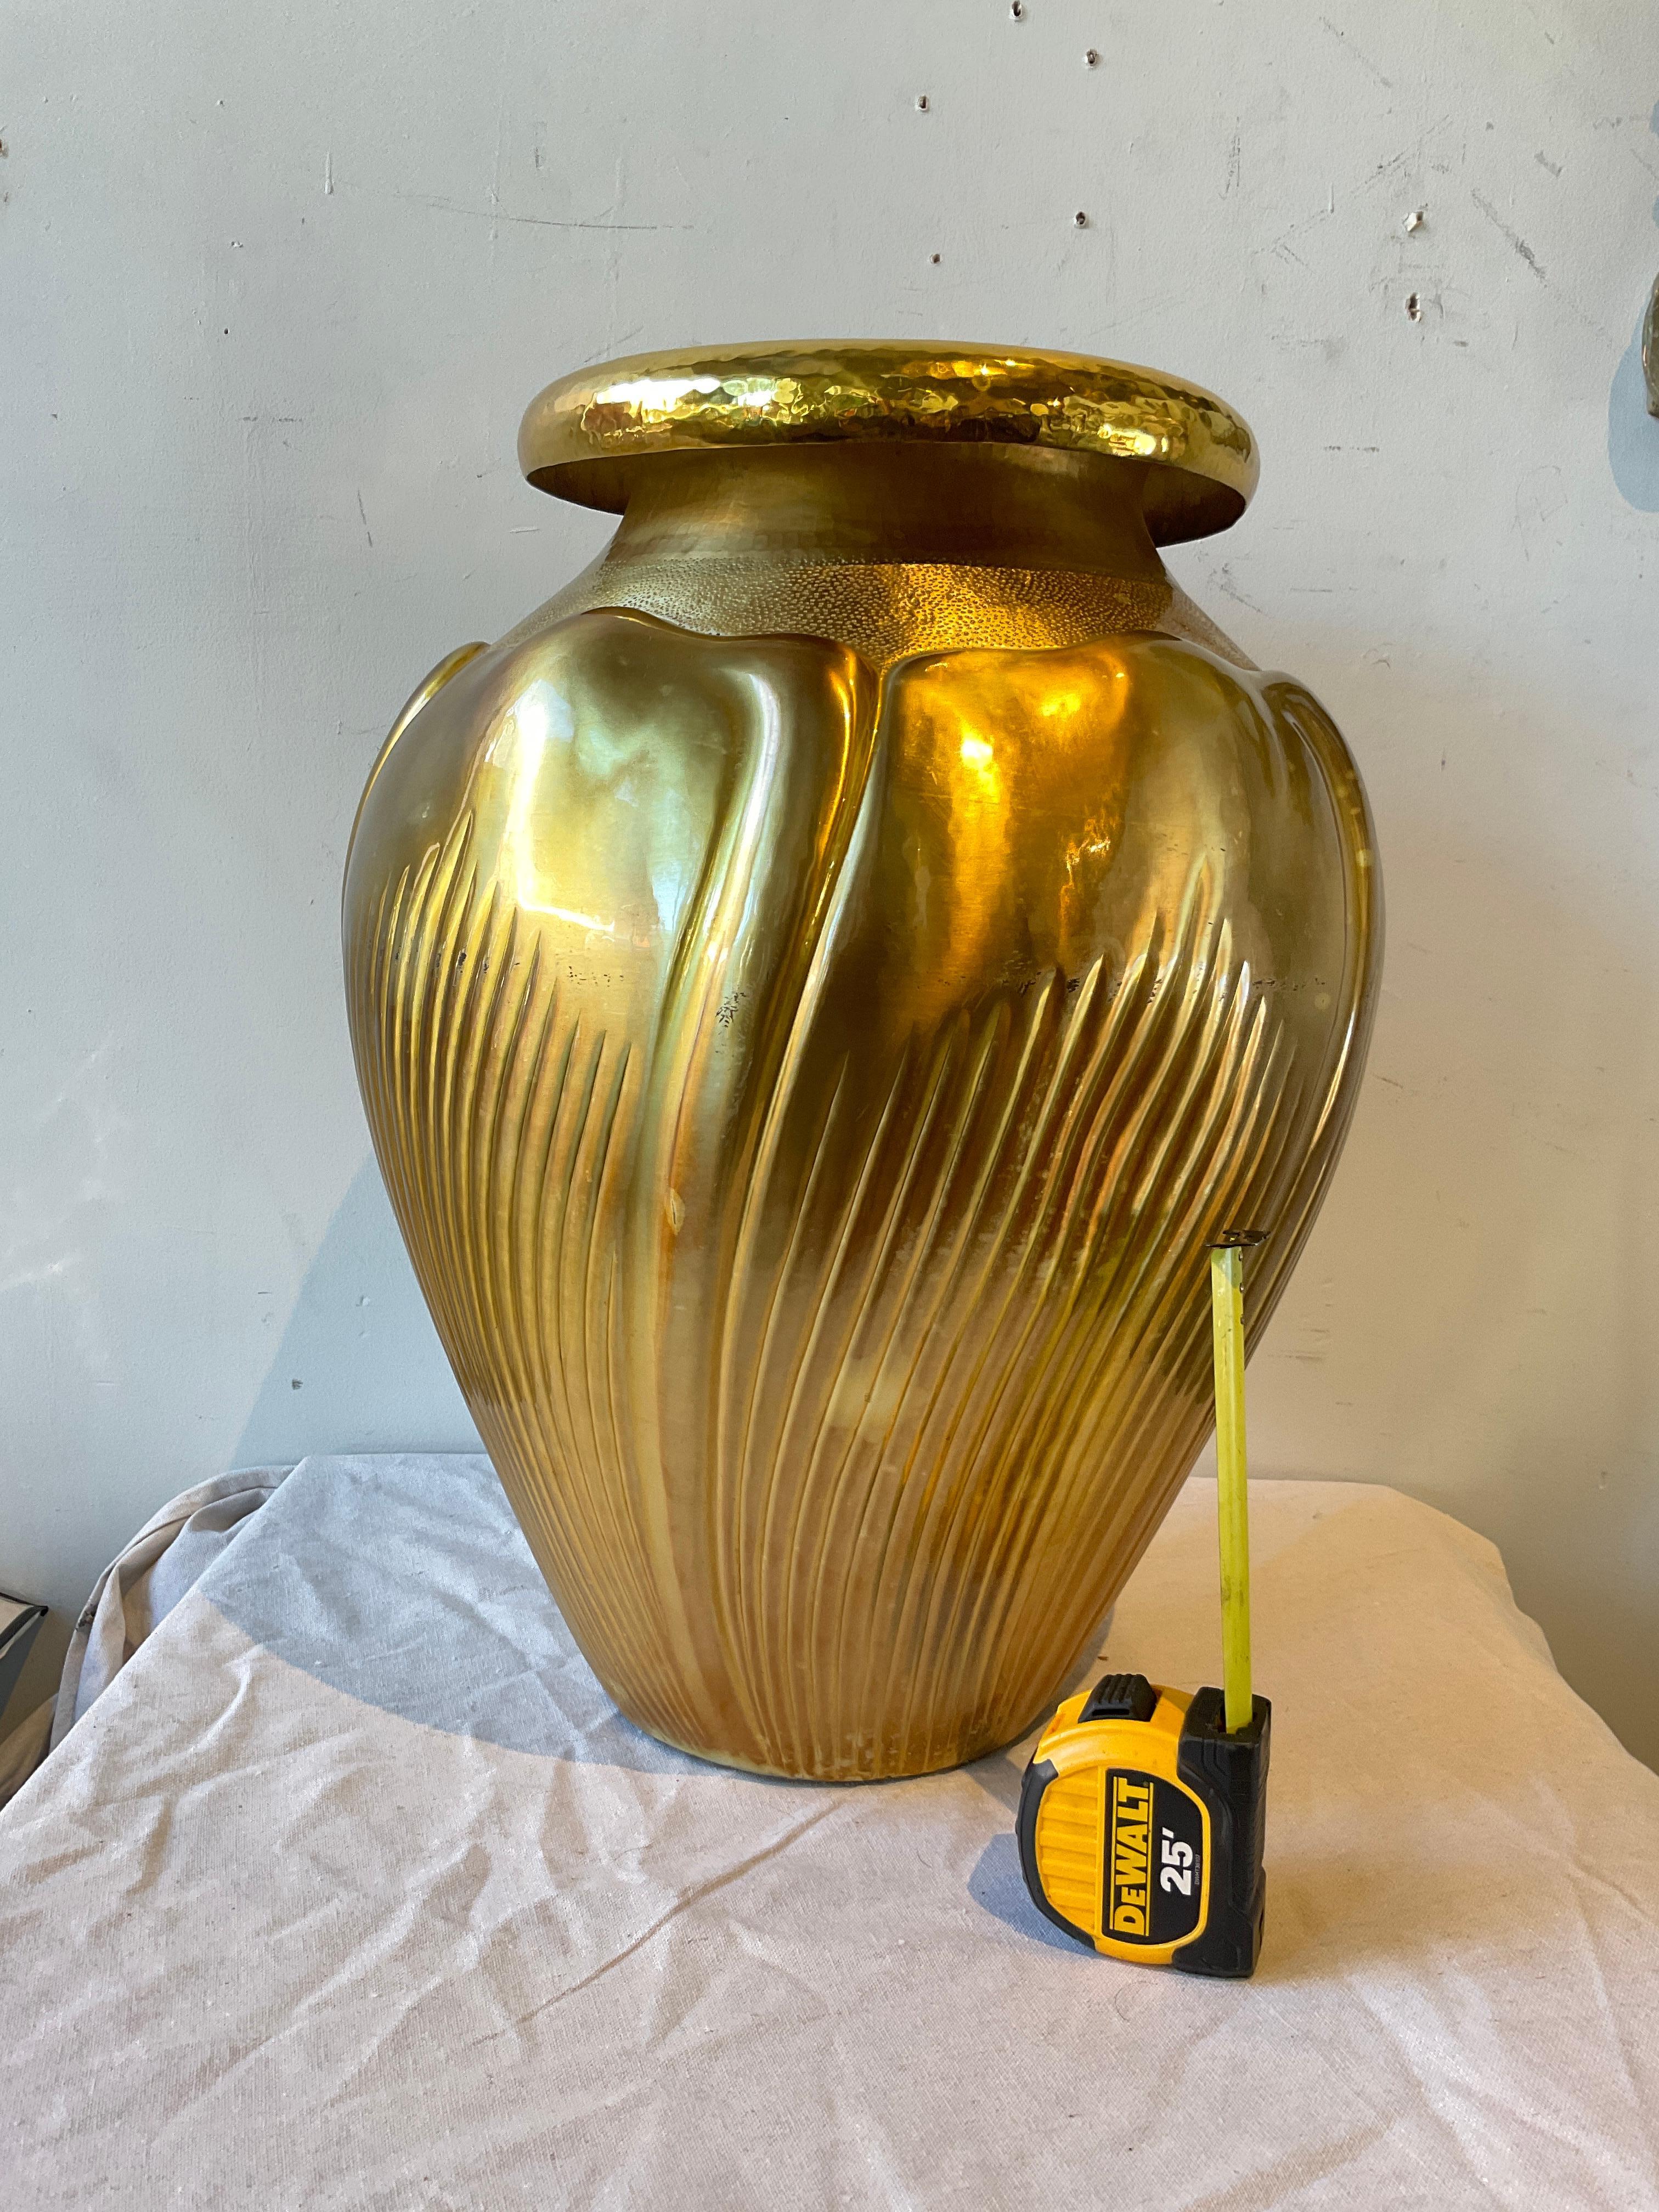 Egidio Broggi  large brass vase. Some marks on vase as shown in pictures.